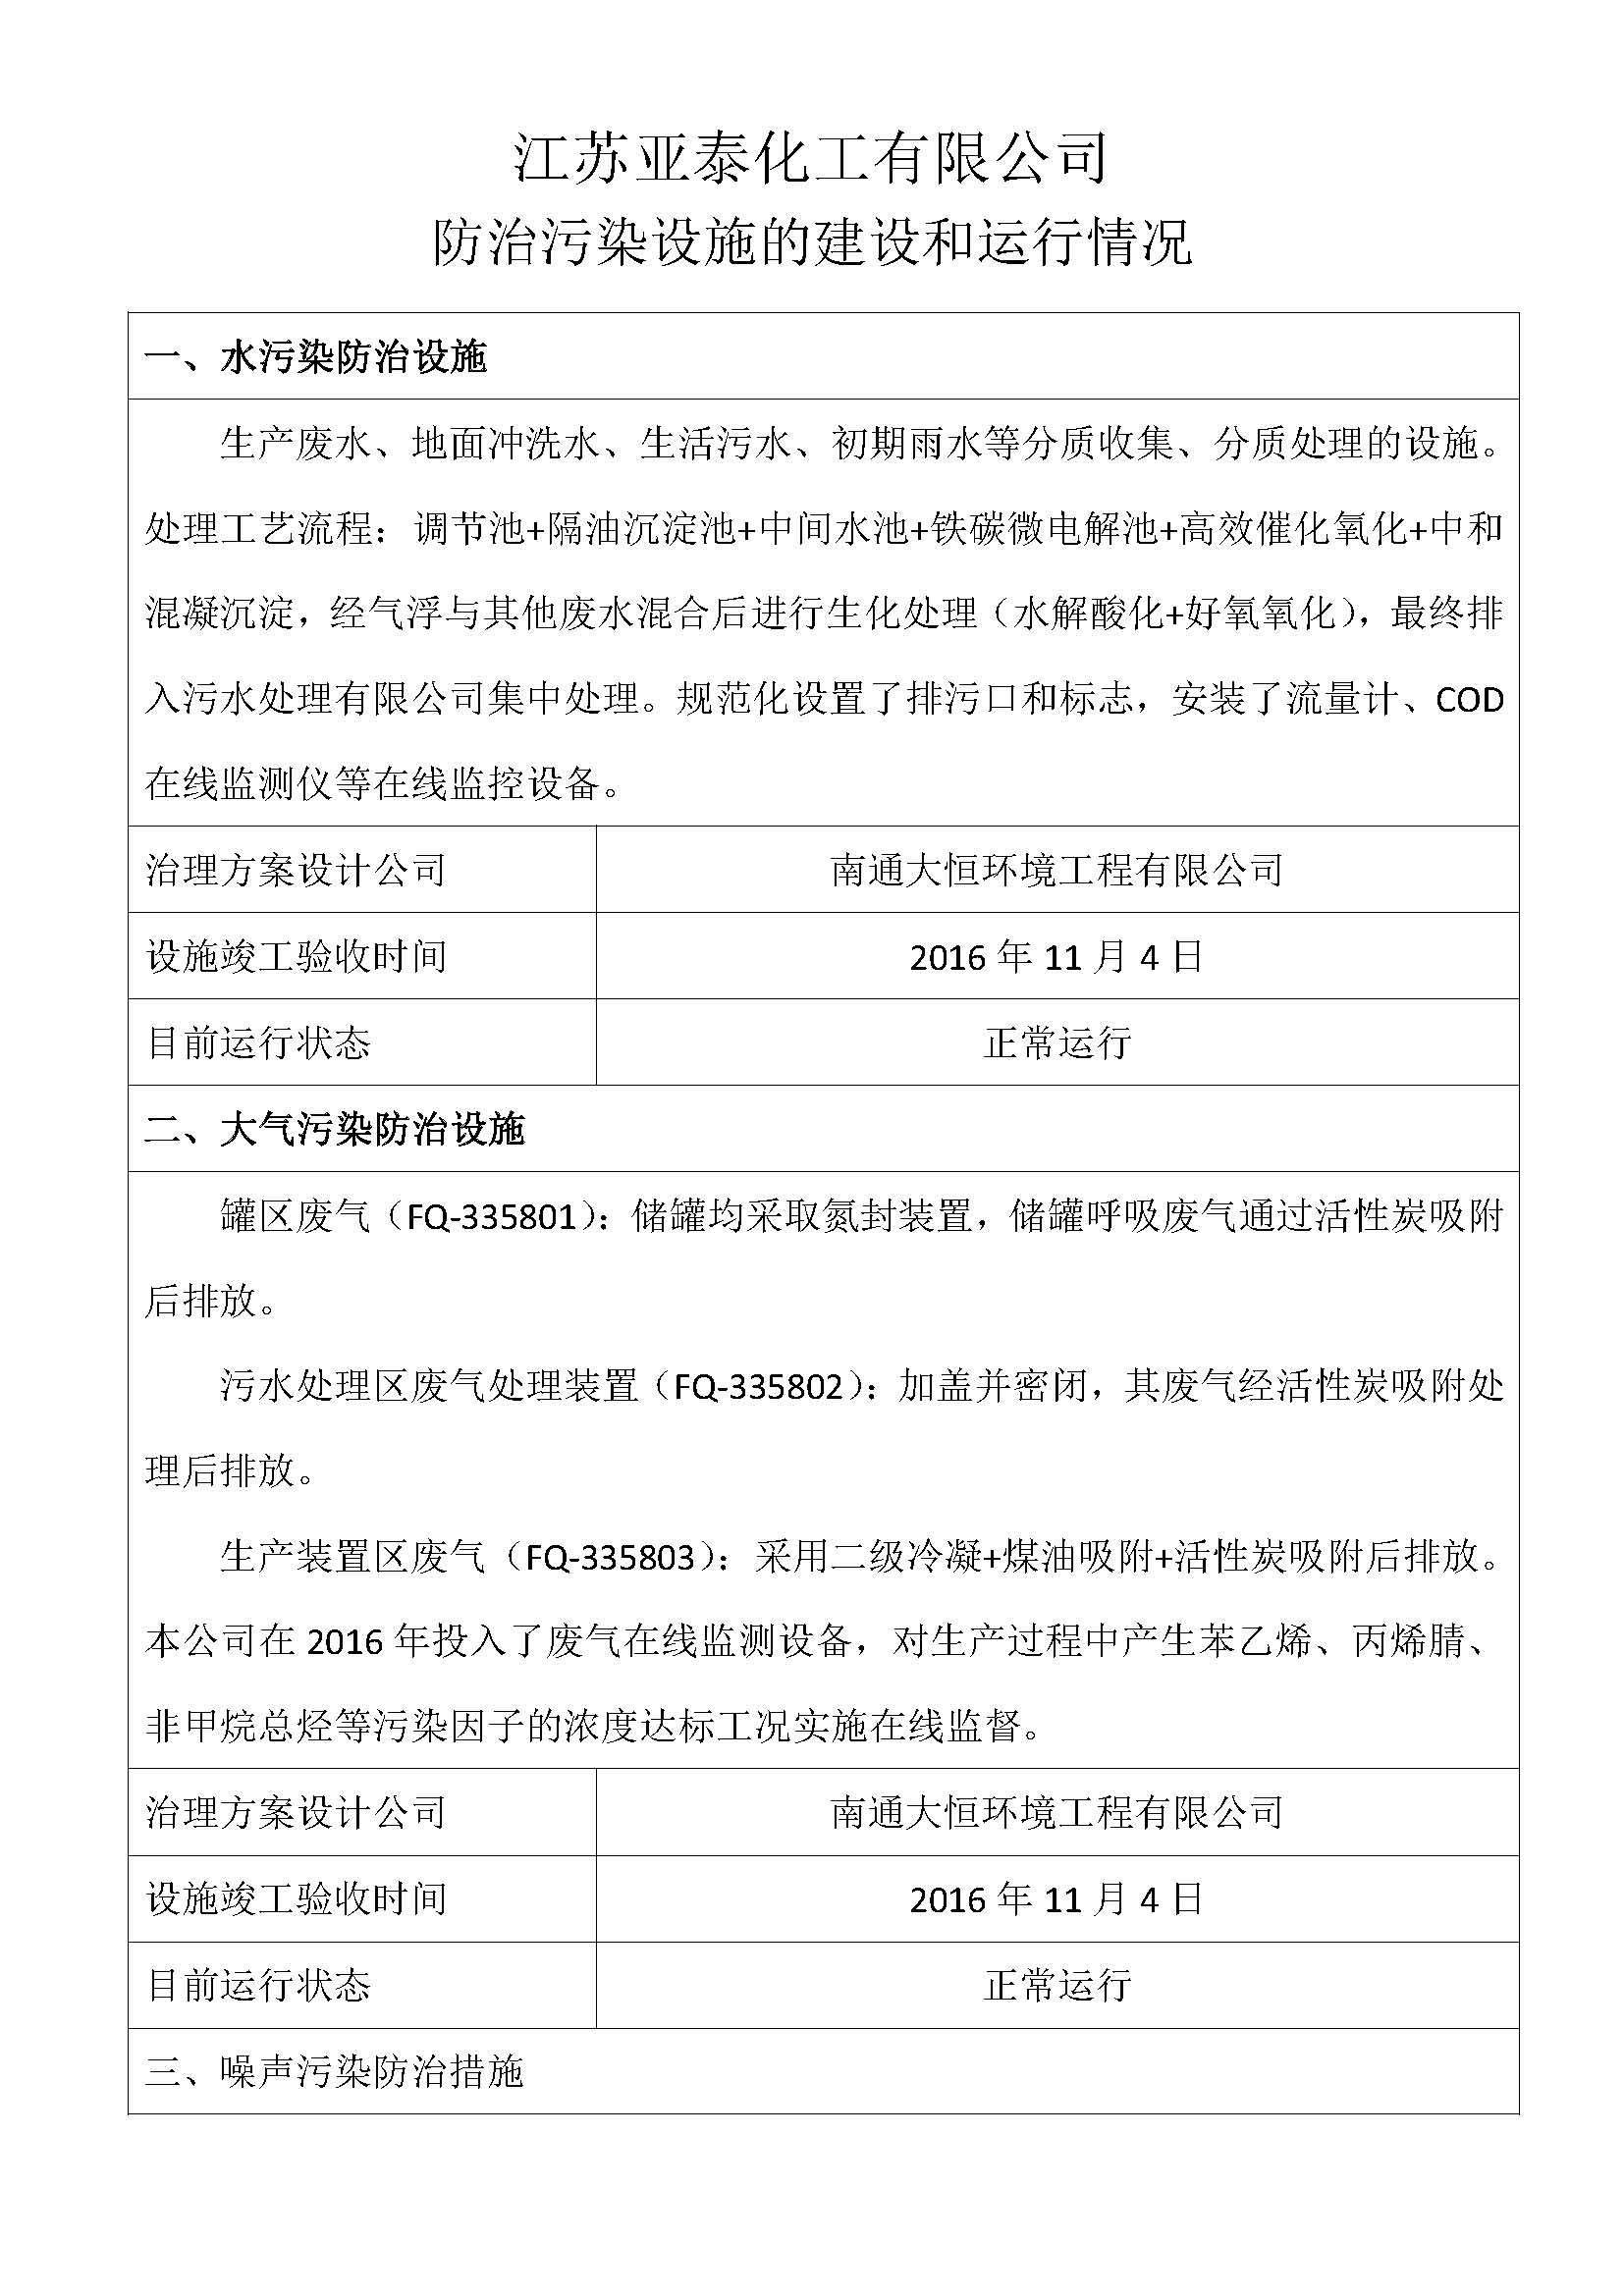 Jiangsu Yatai Chemical Co., Ltd. environmental basic information announced